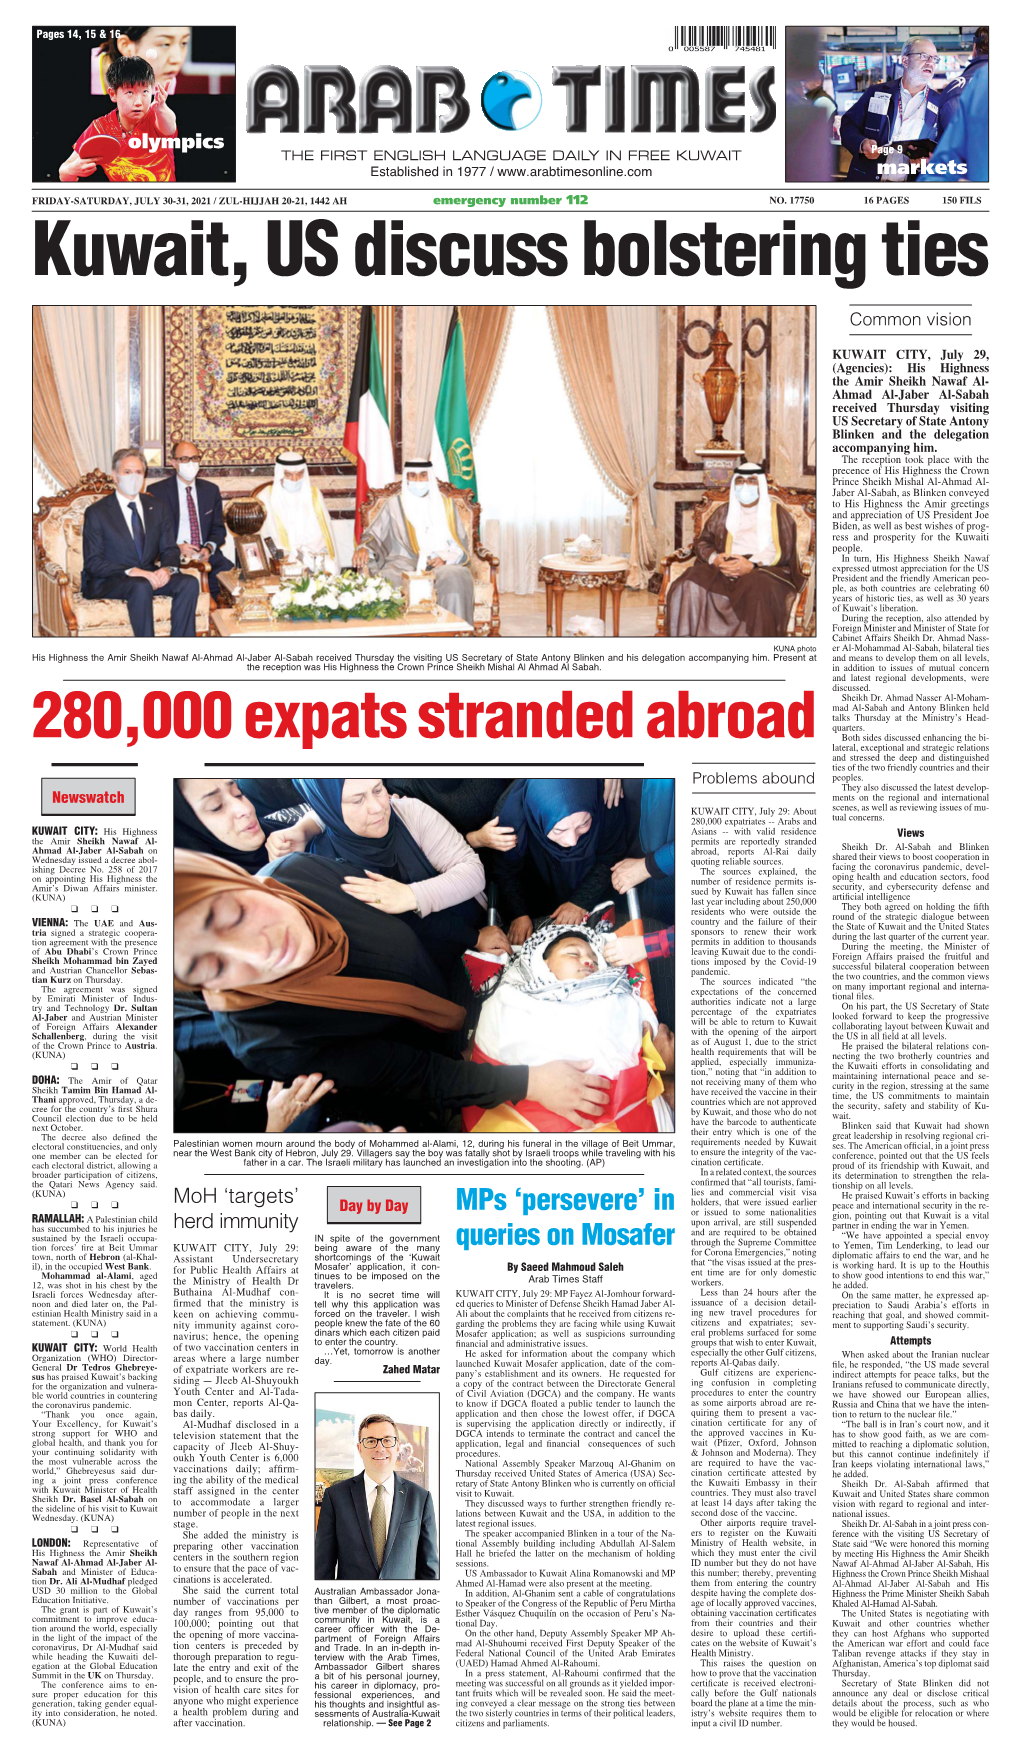 Kuwait, US Discuss Bolstering Ties